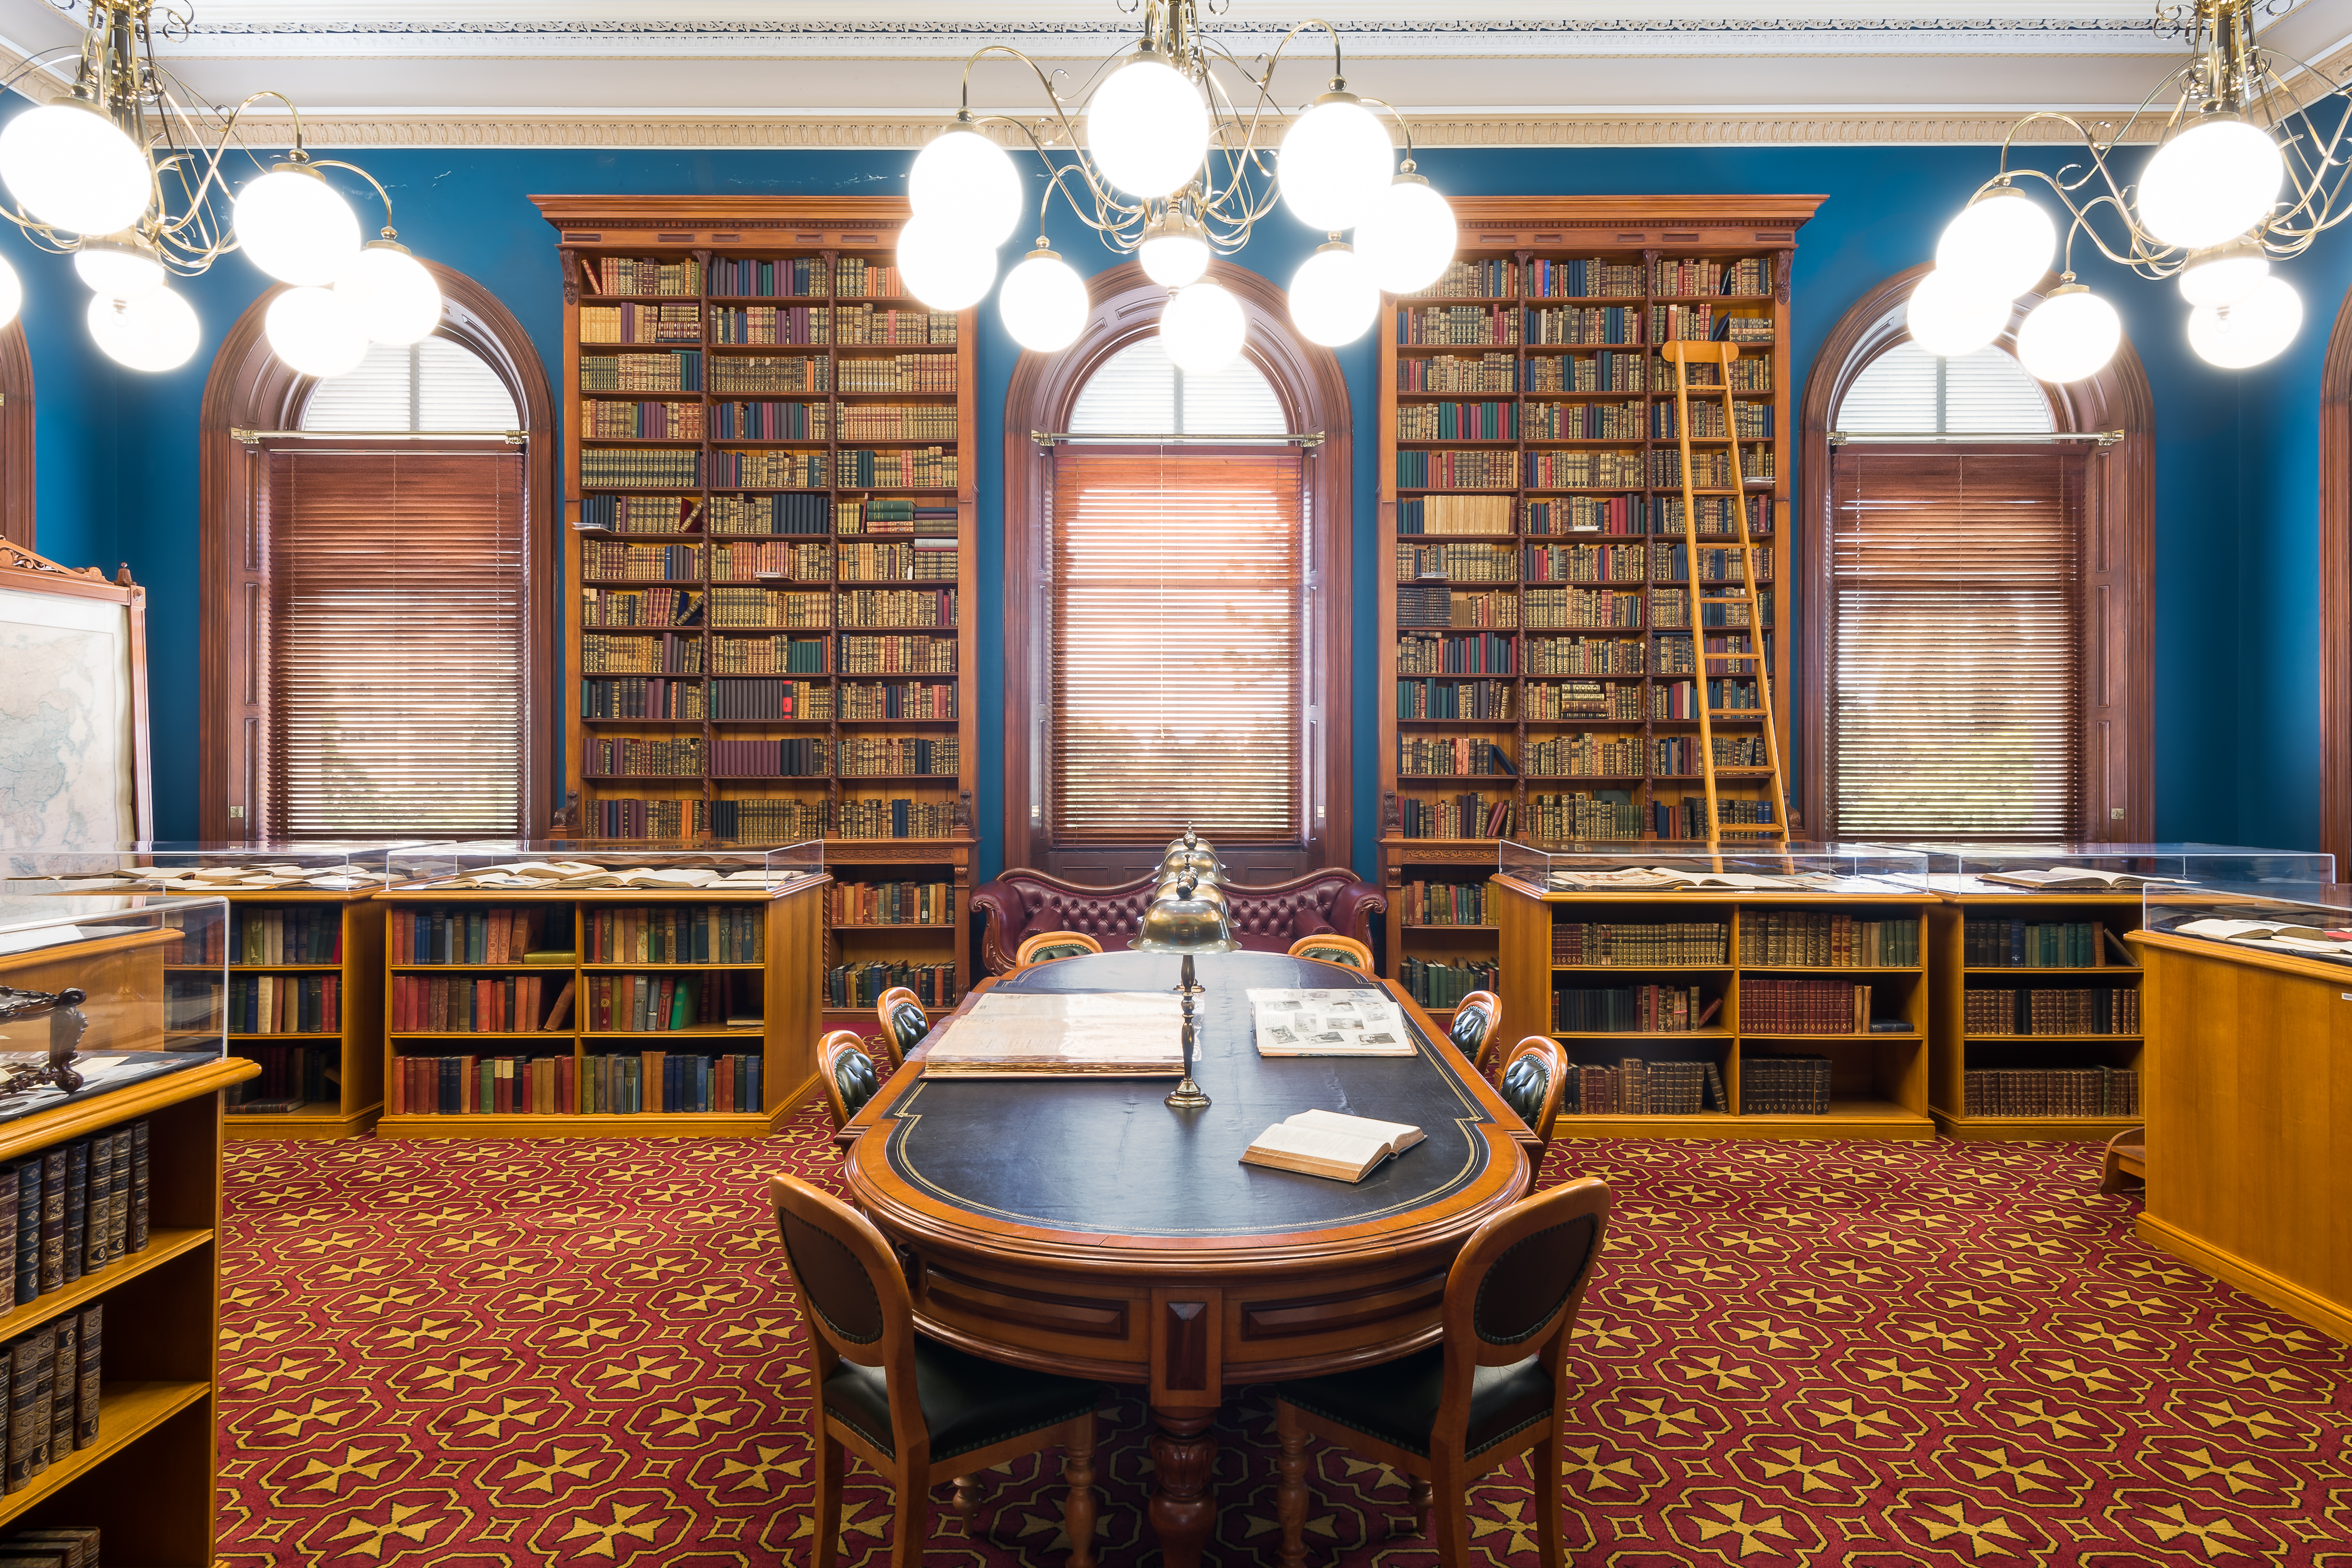 O'Donovan Library - Queensland Parliament